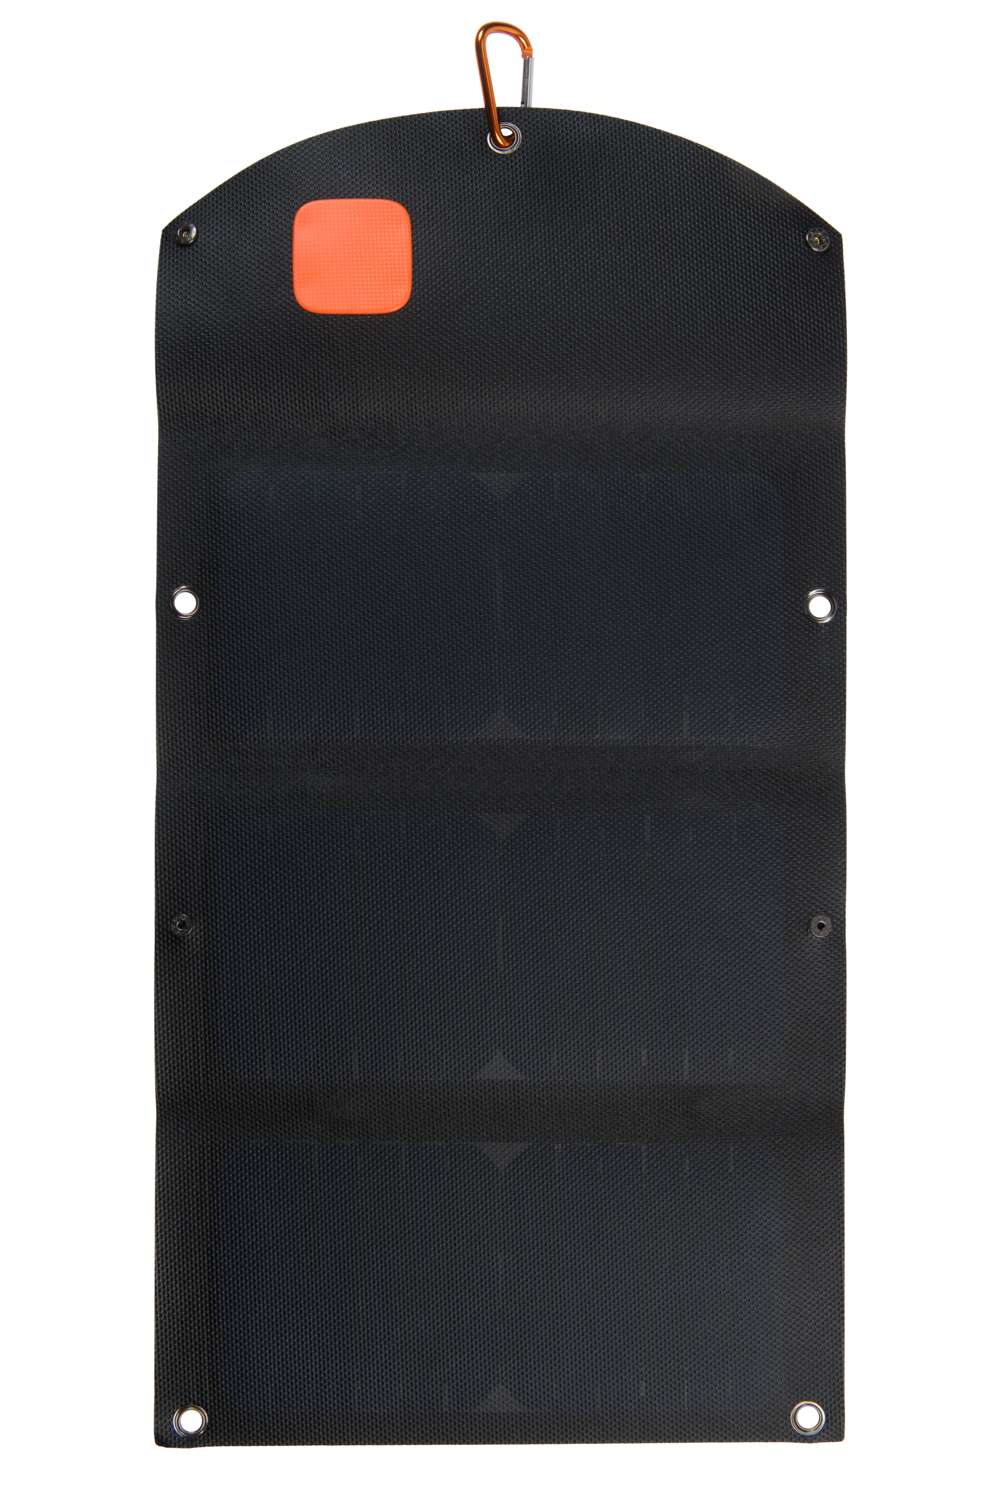 AP275U-XR101 - Xtreme Sonnenkollektor SolarBooster + Powerbank Rugged - 21 W - 10000 mAh